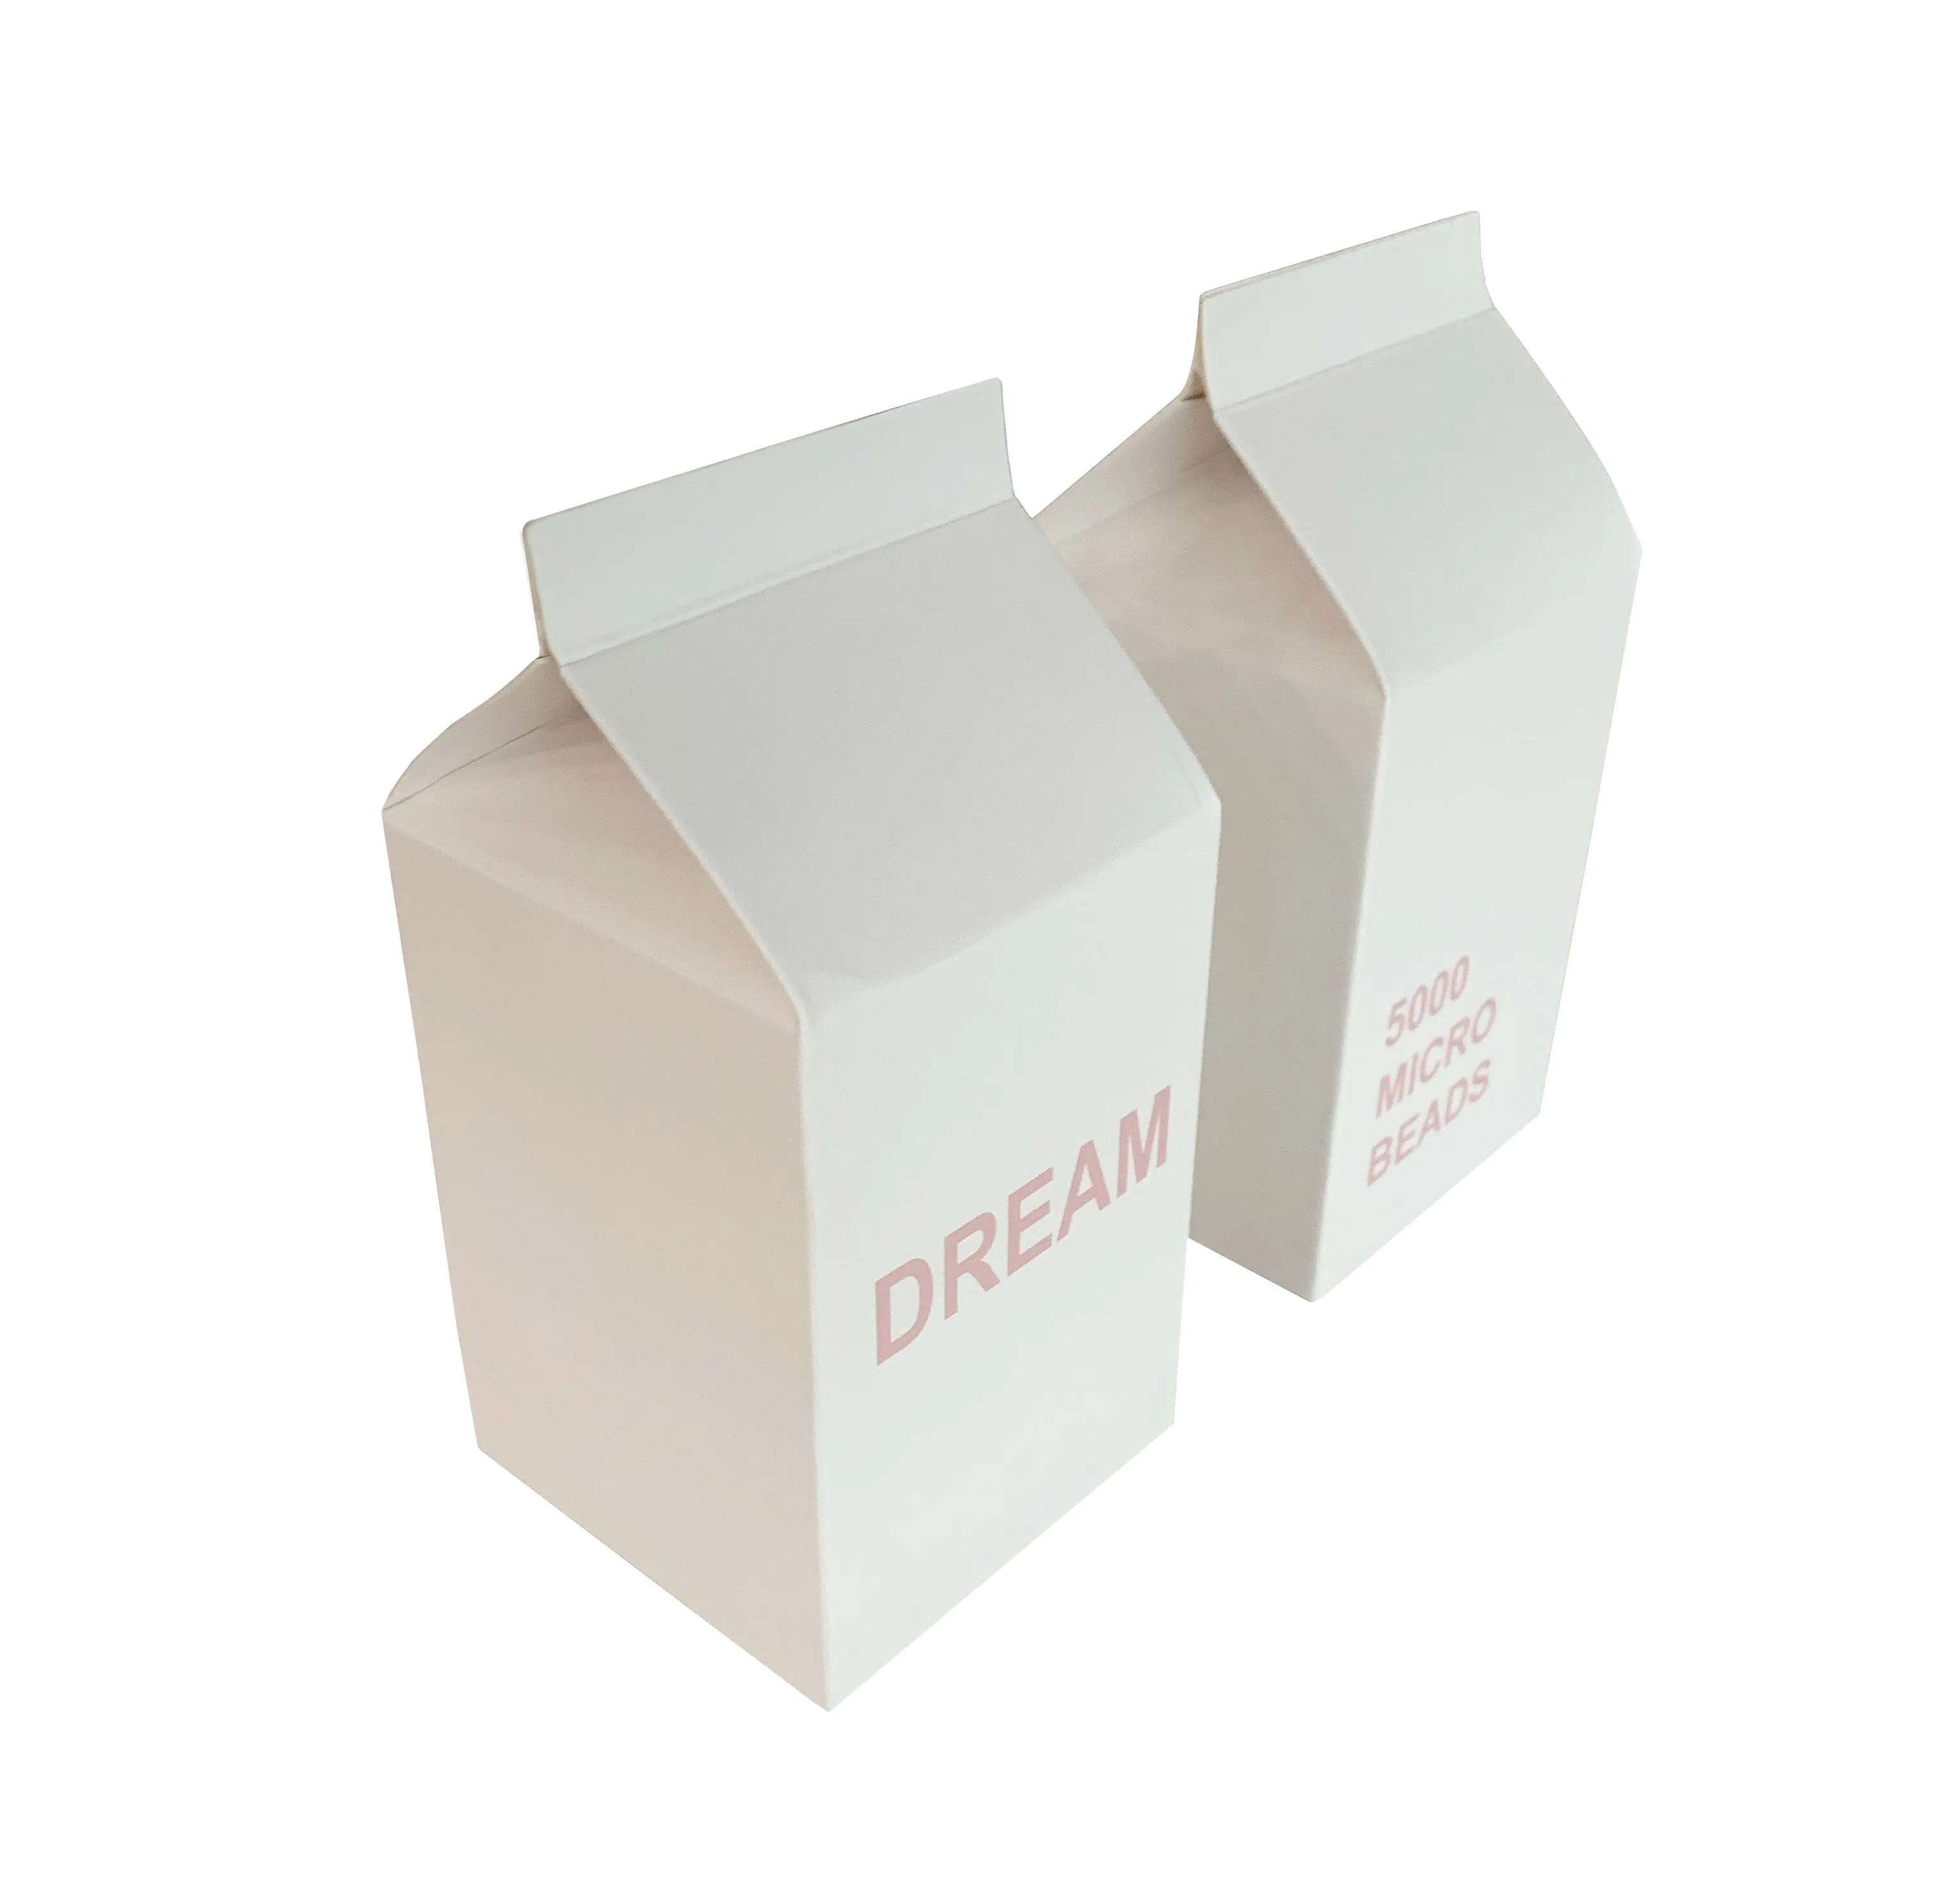 Custom Logo Printed Folding Paper Gable Top Box For Packaging